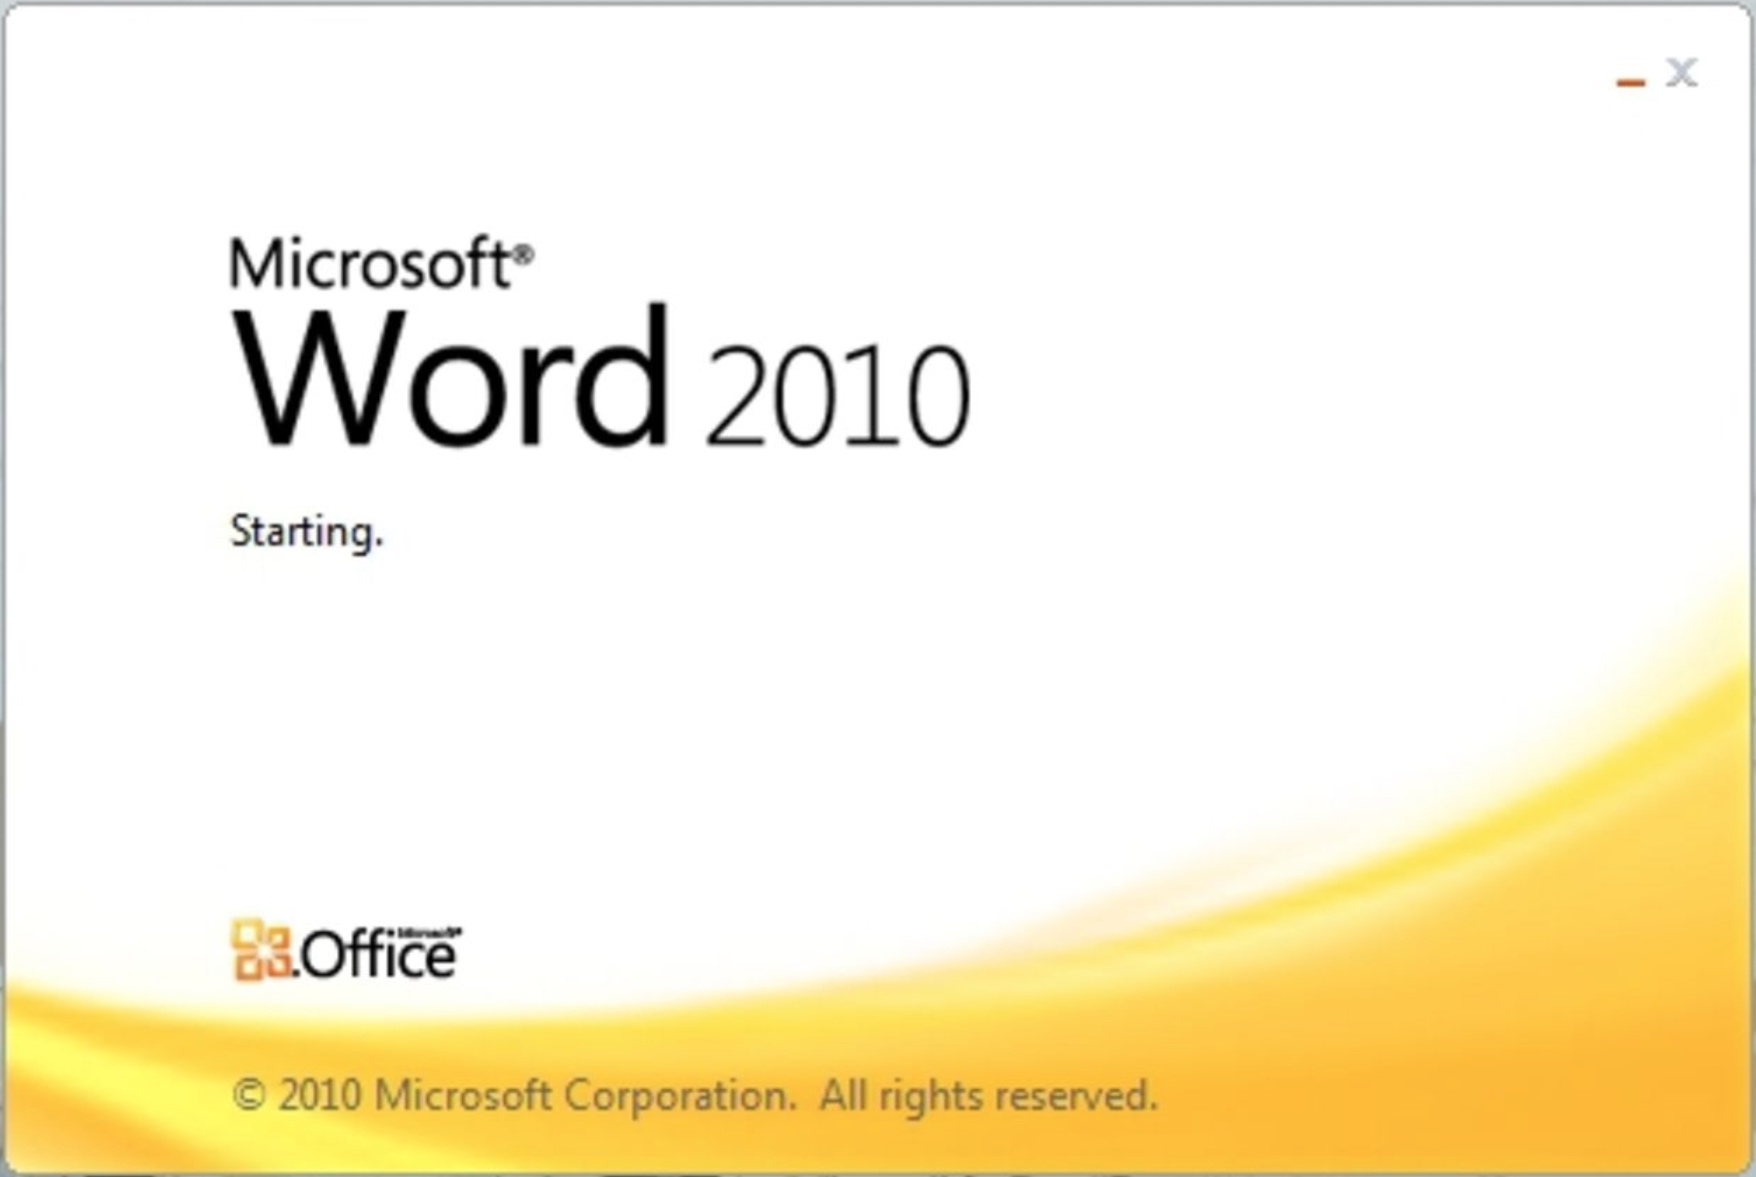 Microsoft Word 2010 Splash Screen (2010)